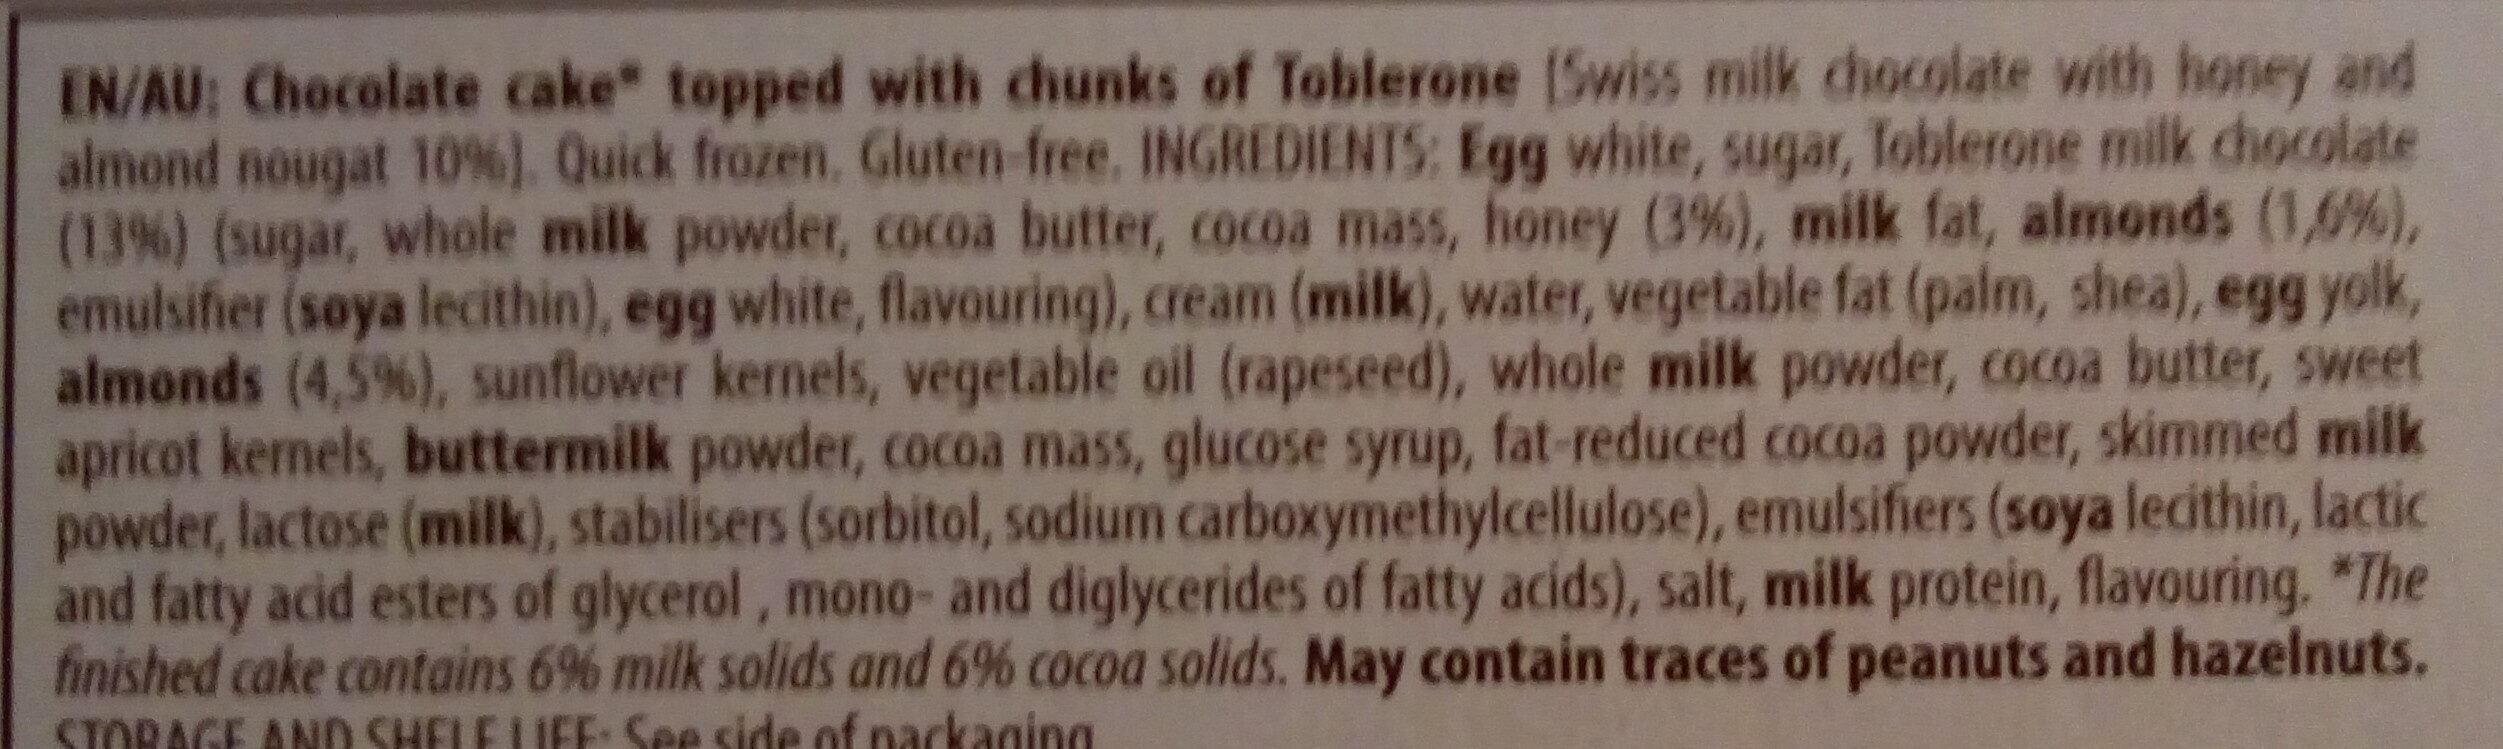 Chocolate Cake - Ingredients